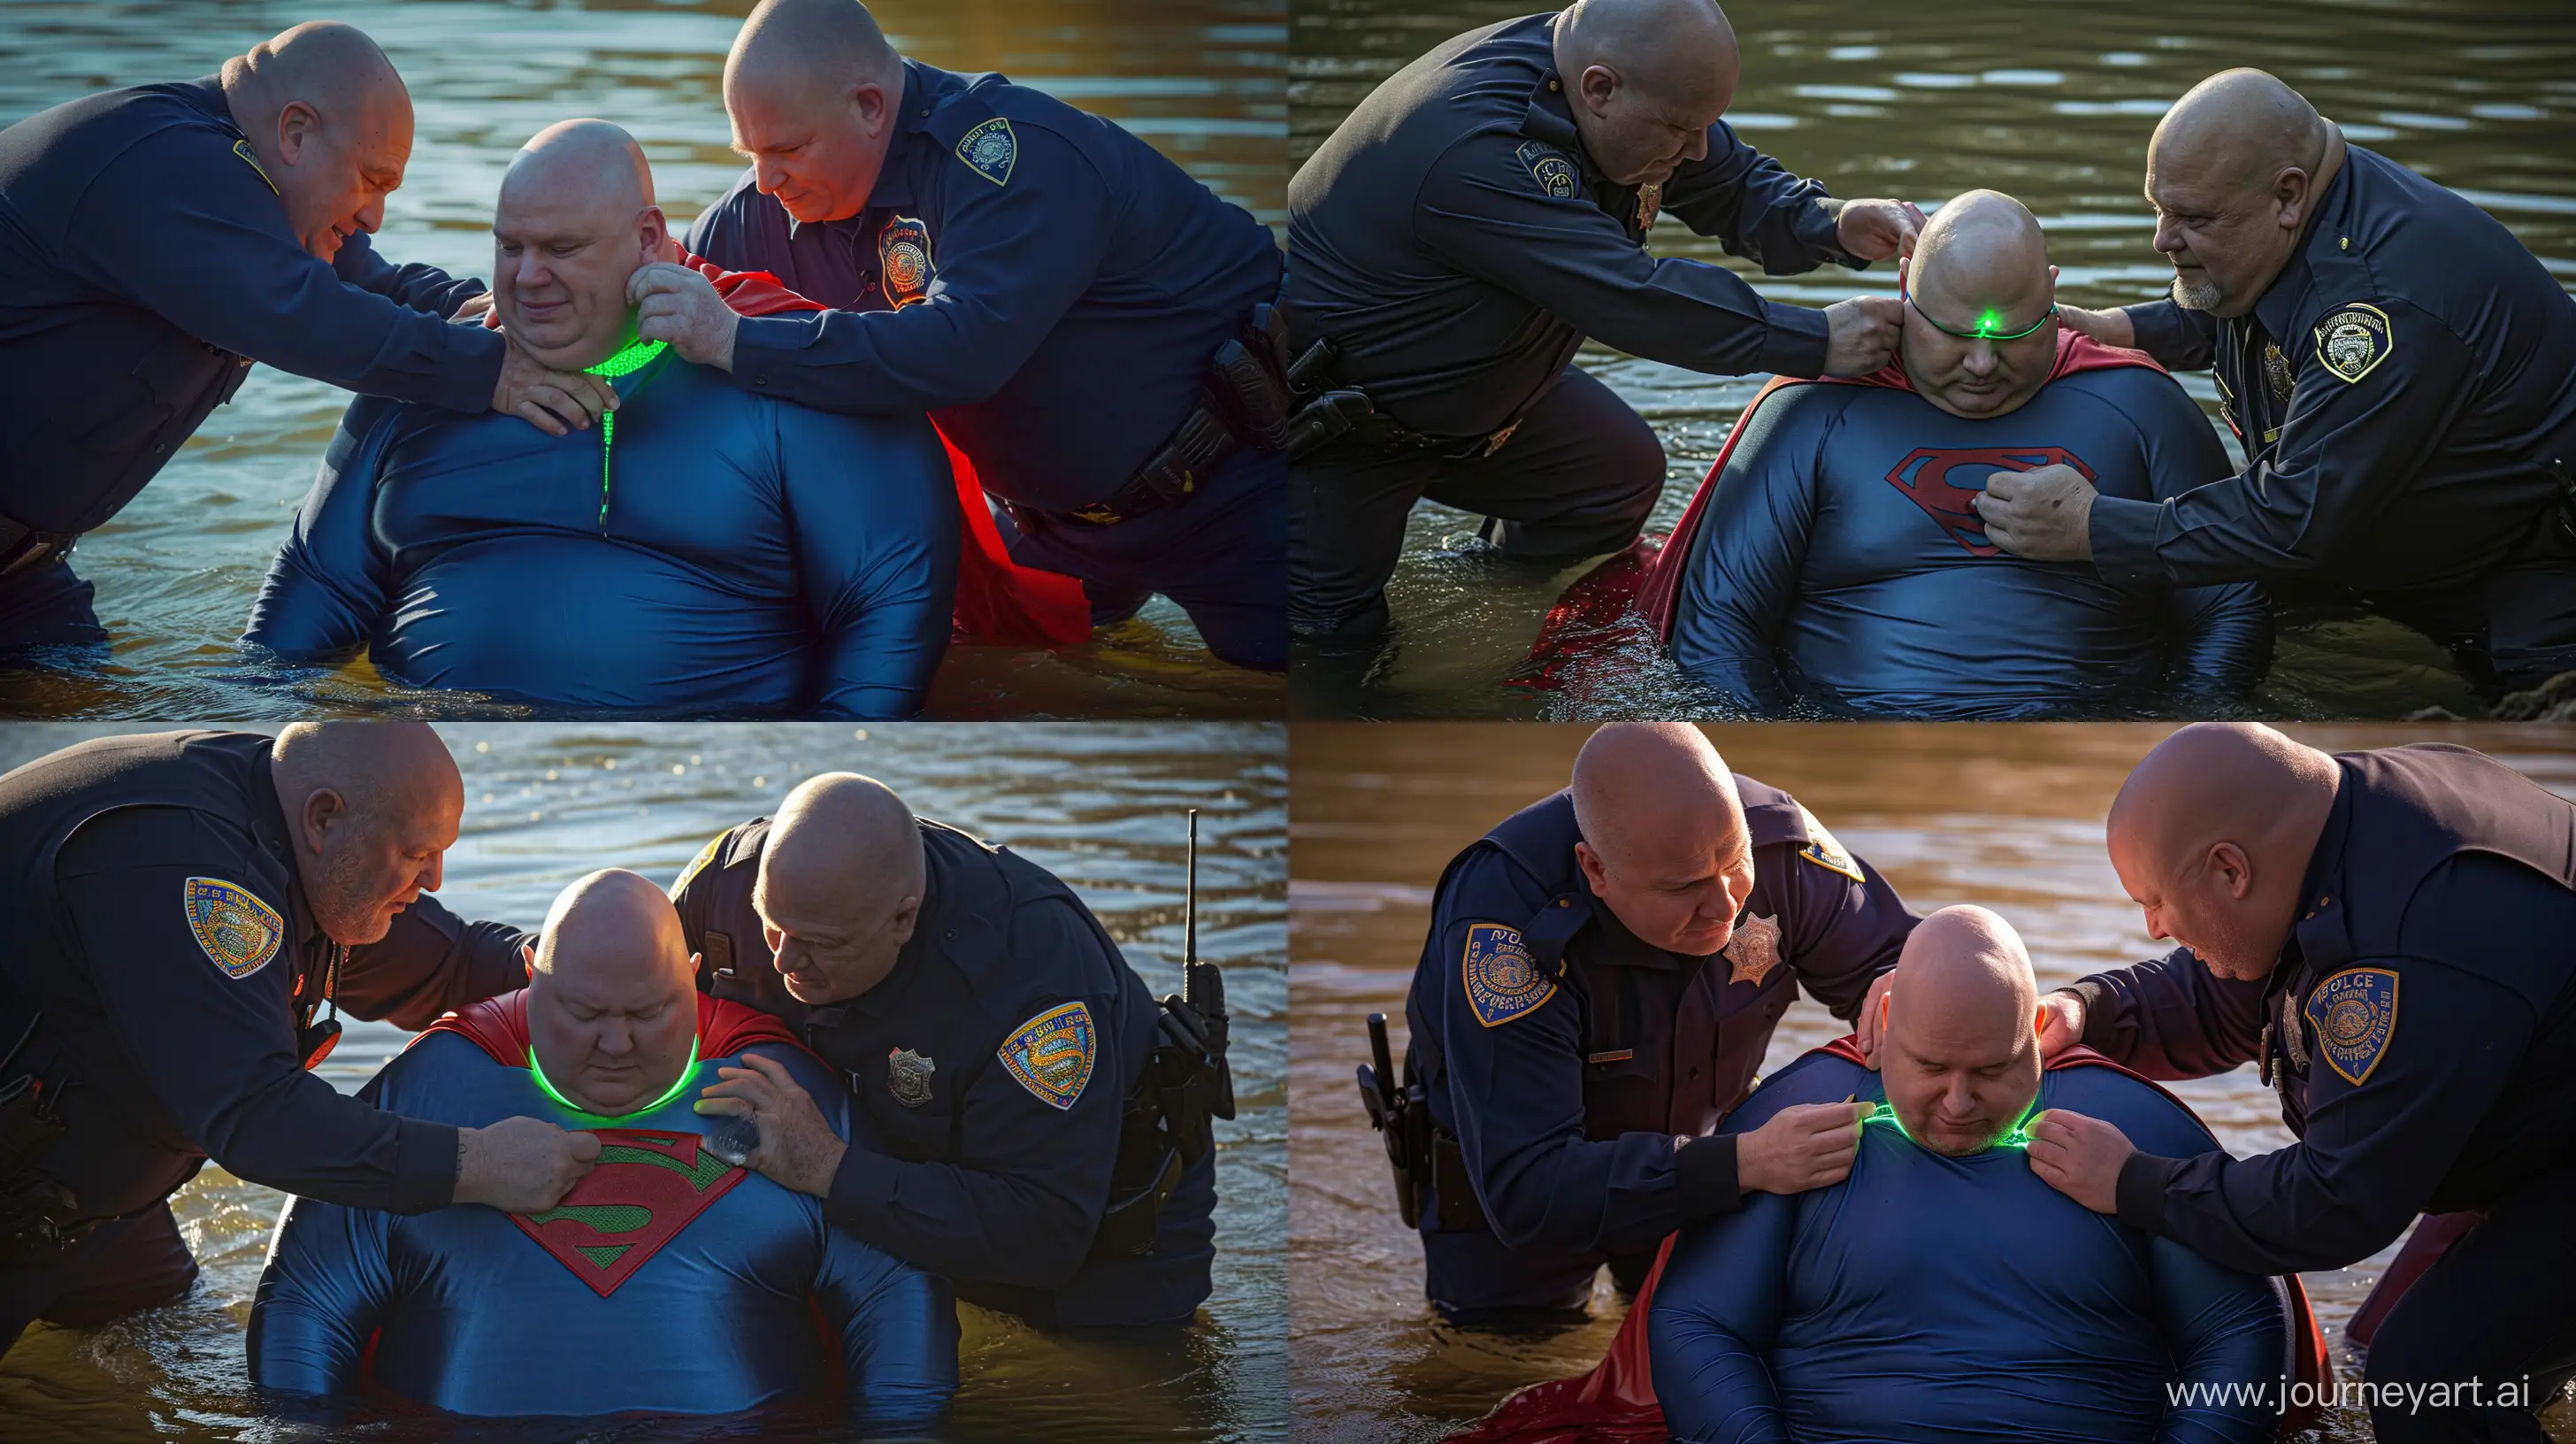 Elderly-Men-in-Police-Uniforms-Secure-Green-Glowing-Collar-on-WaterSitting-Superman